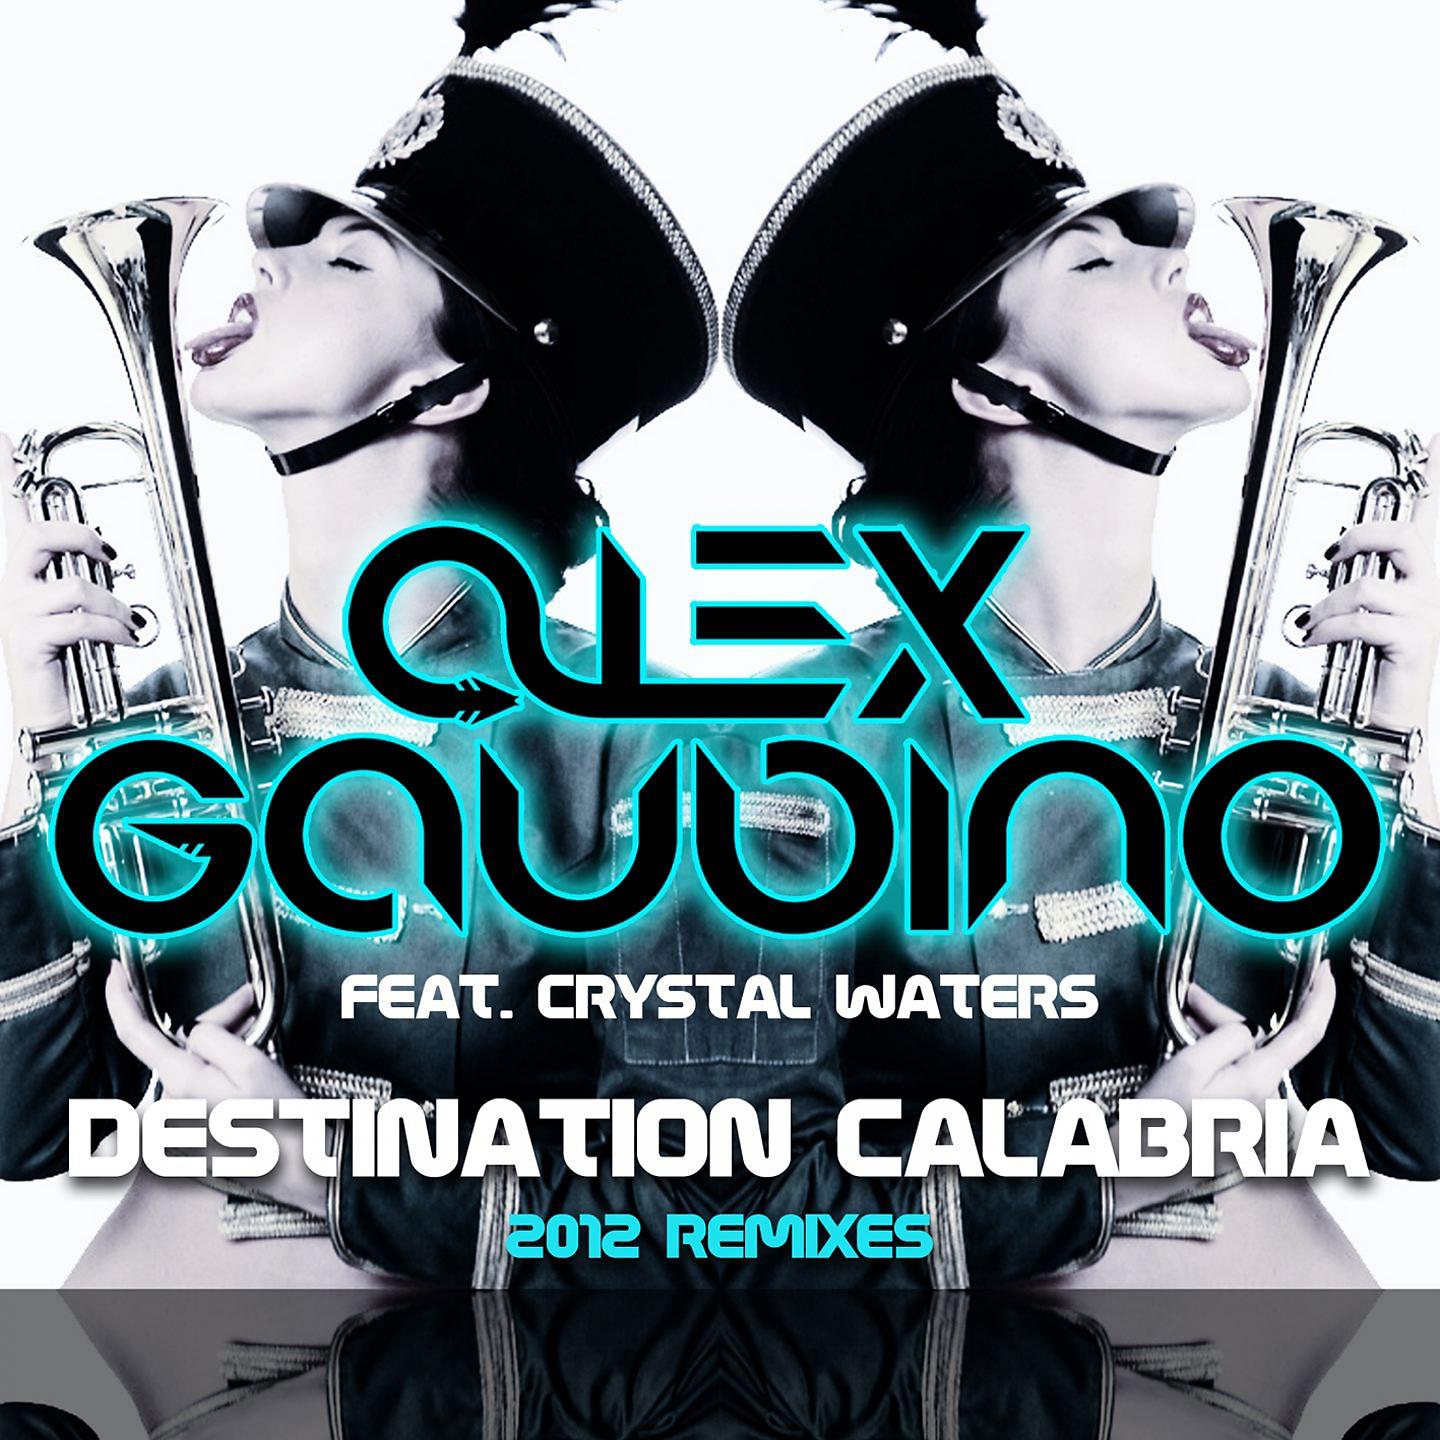 Crystal calabria. Гаудино дестинейшн. Alex Gaudino Crystal Waters. Alex Gaudino feat. Crystal Waters - destination Calabria. Alex Gaudino destination Calabria.